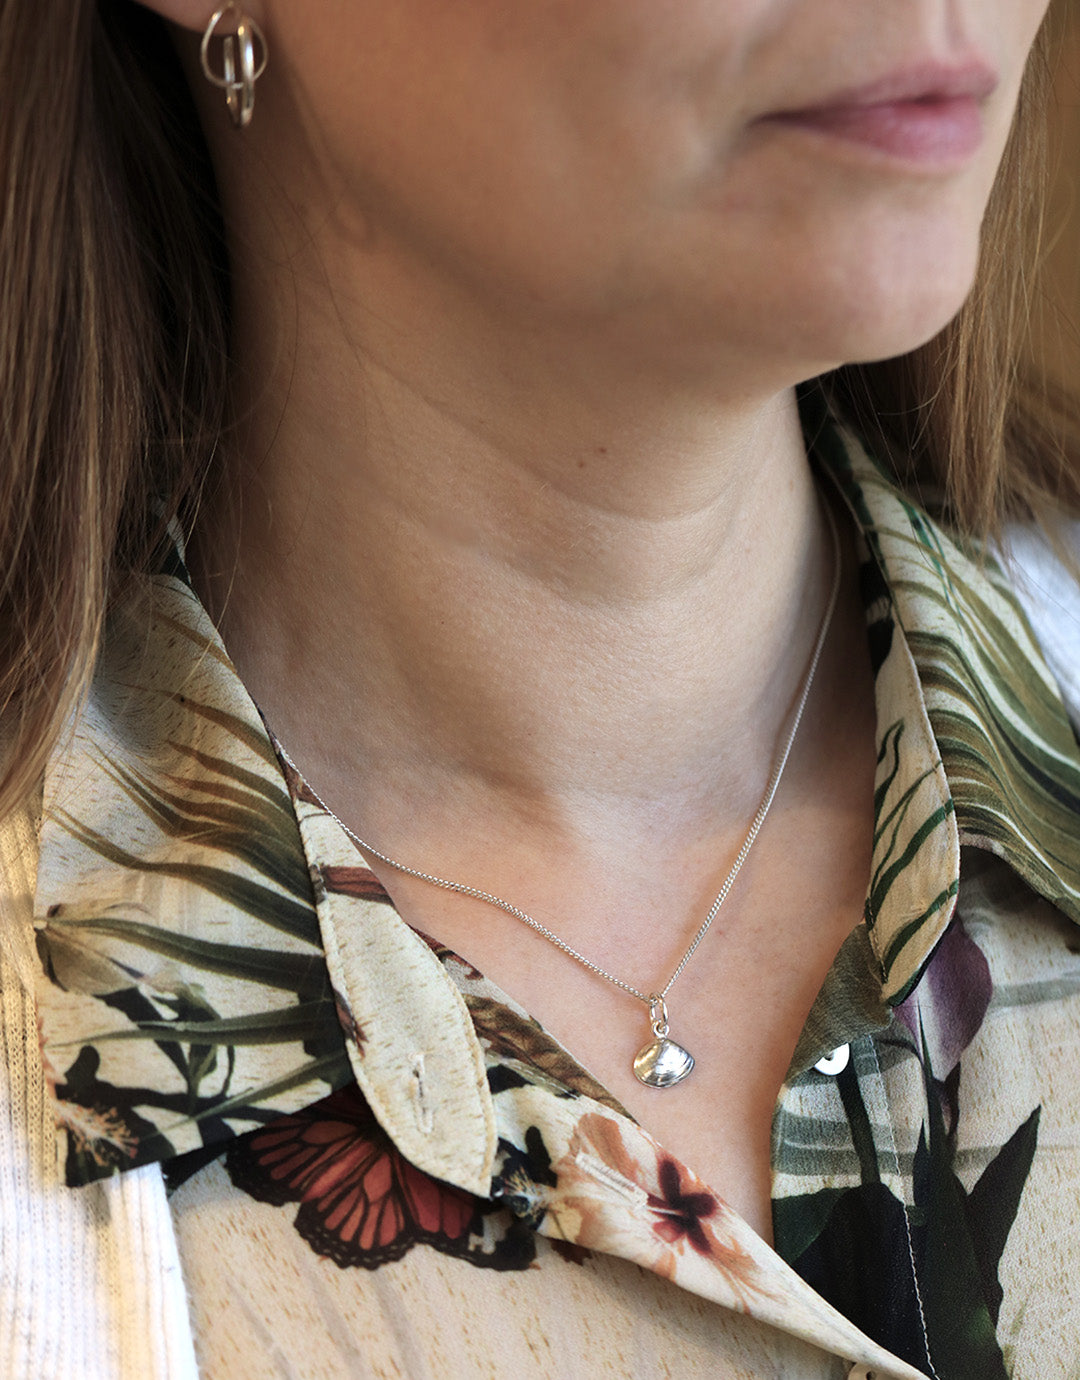 SANDMUSSLA (Sand mussel) XS necklace